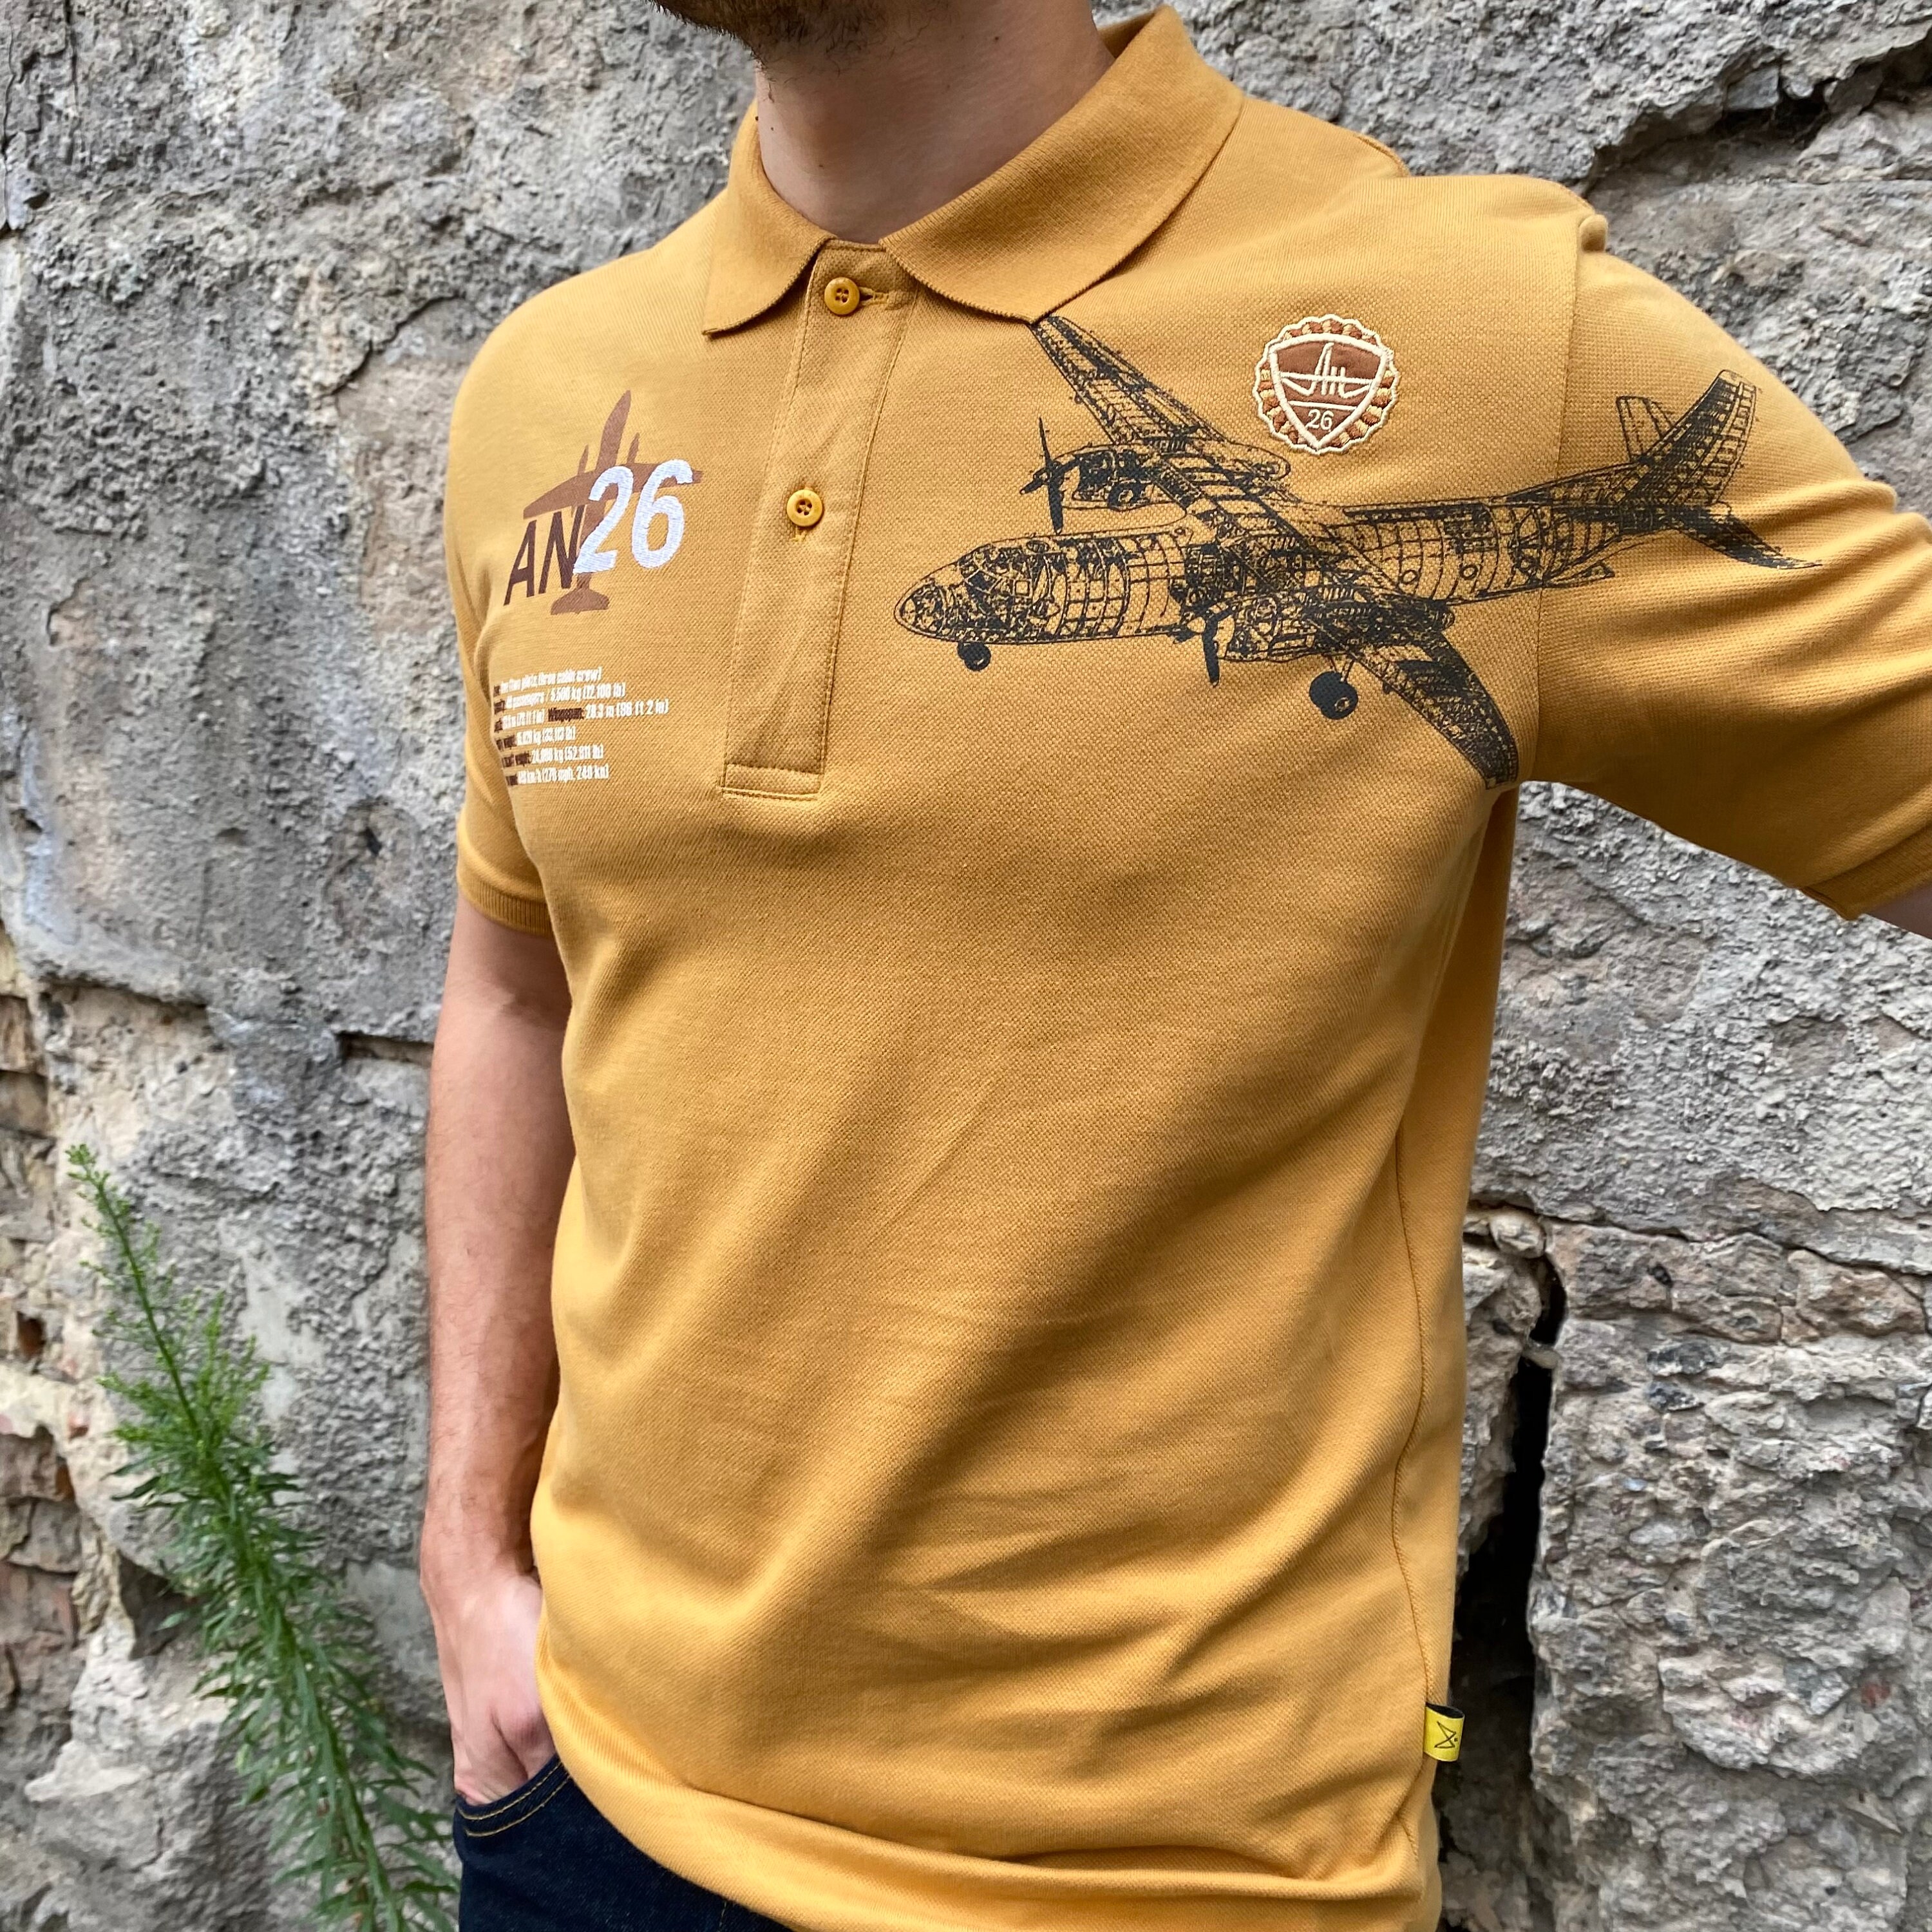  Plane Aircraft Airplane Jet Men's Polo Shirts Long Sleeve Golf  Shirt Casual Tennis T-Shirt Tops S : Sports & Outdoors